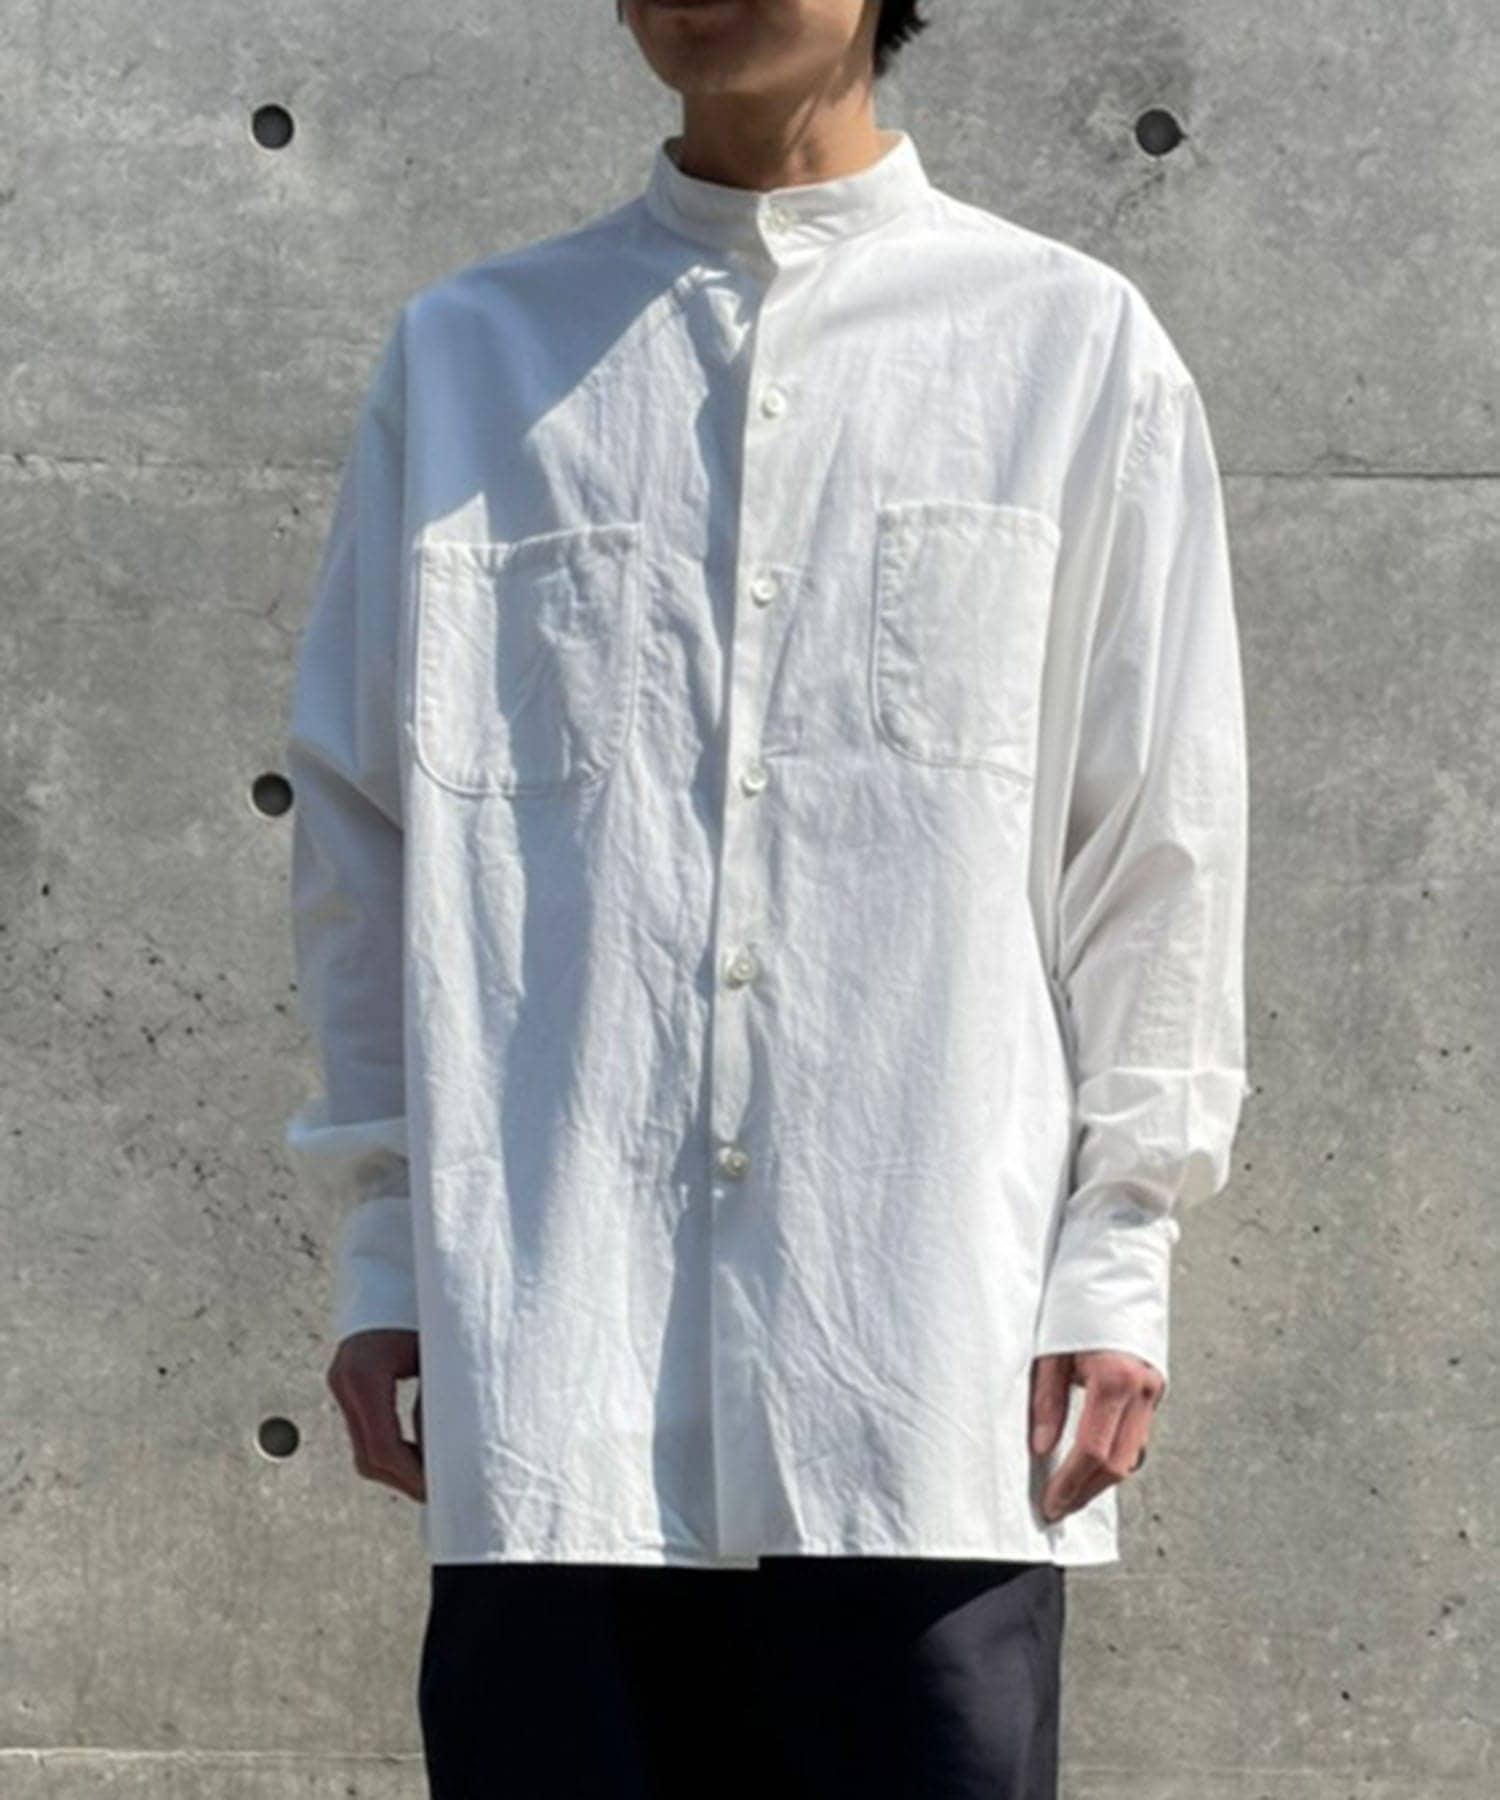 Over Sized Isamu Noguchi Shirts